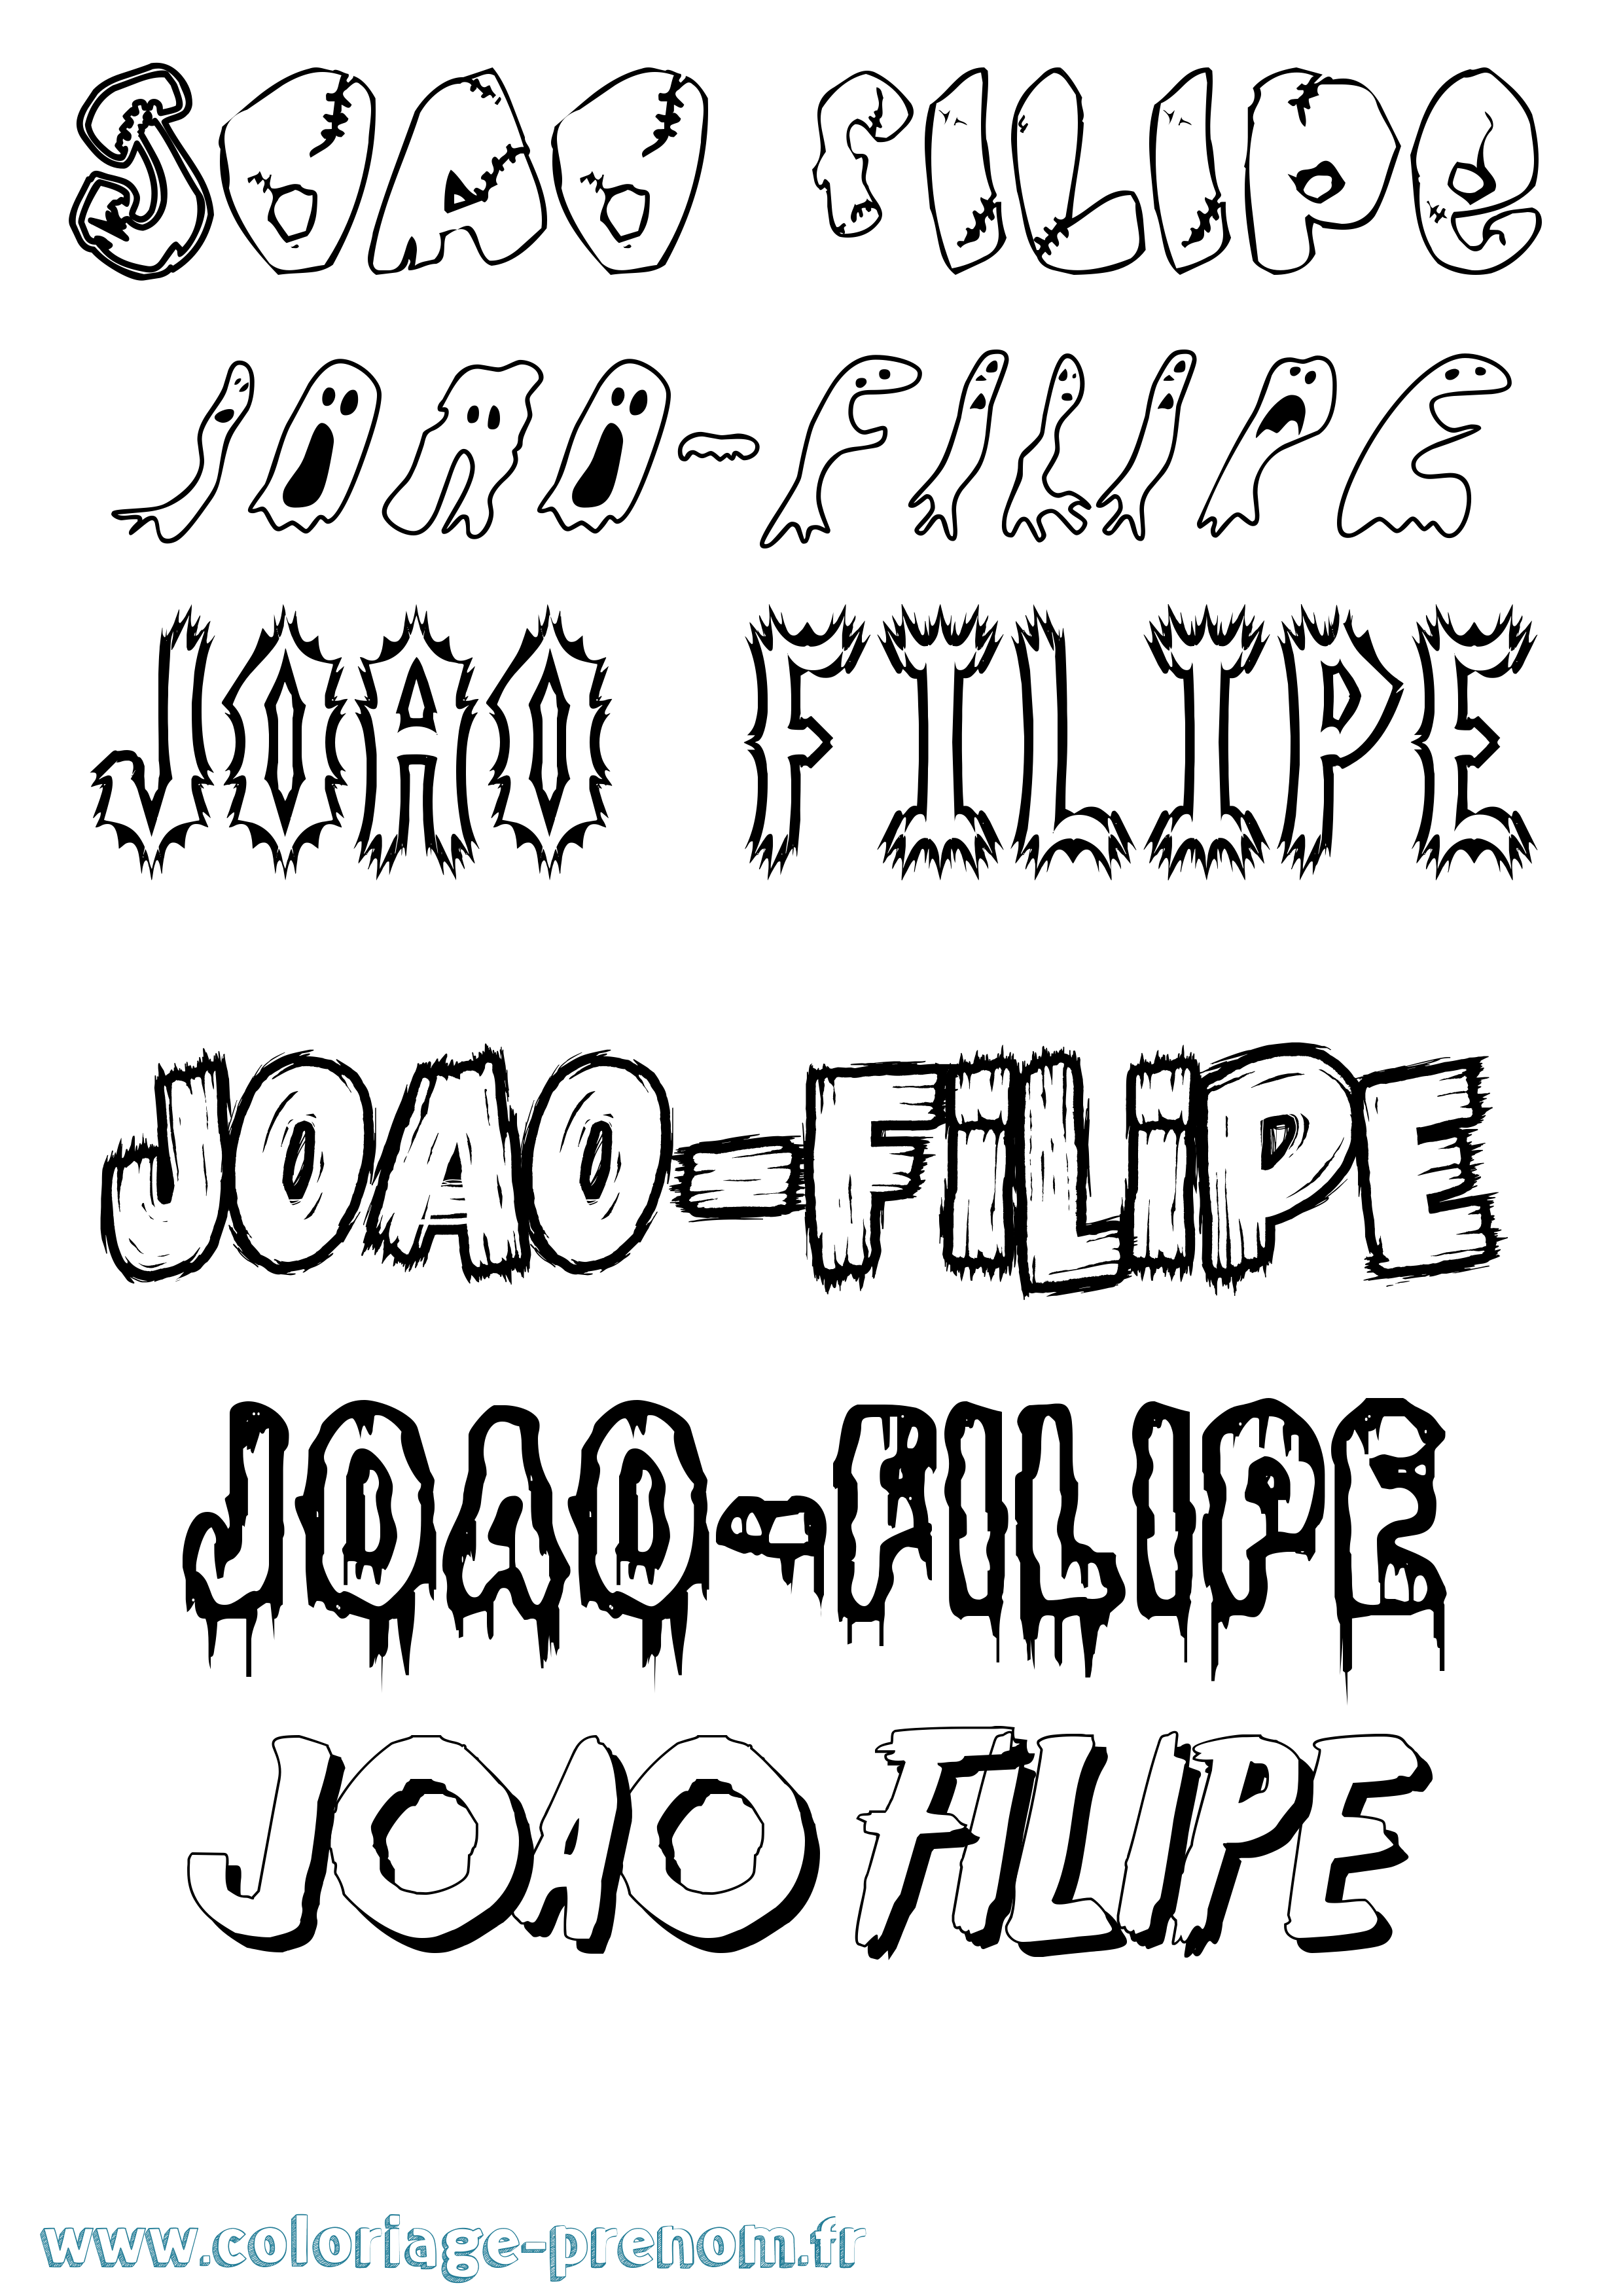 Coloriage prénom Joao-Filipe Frisson